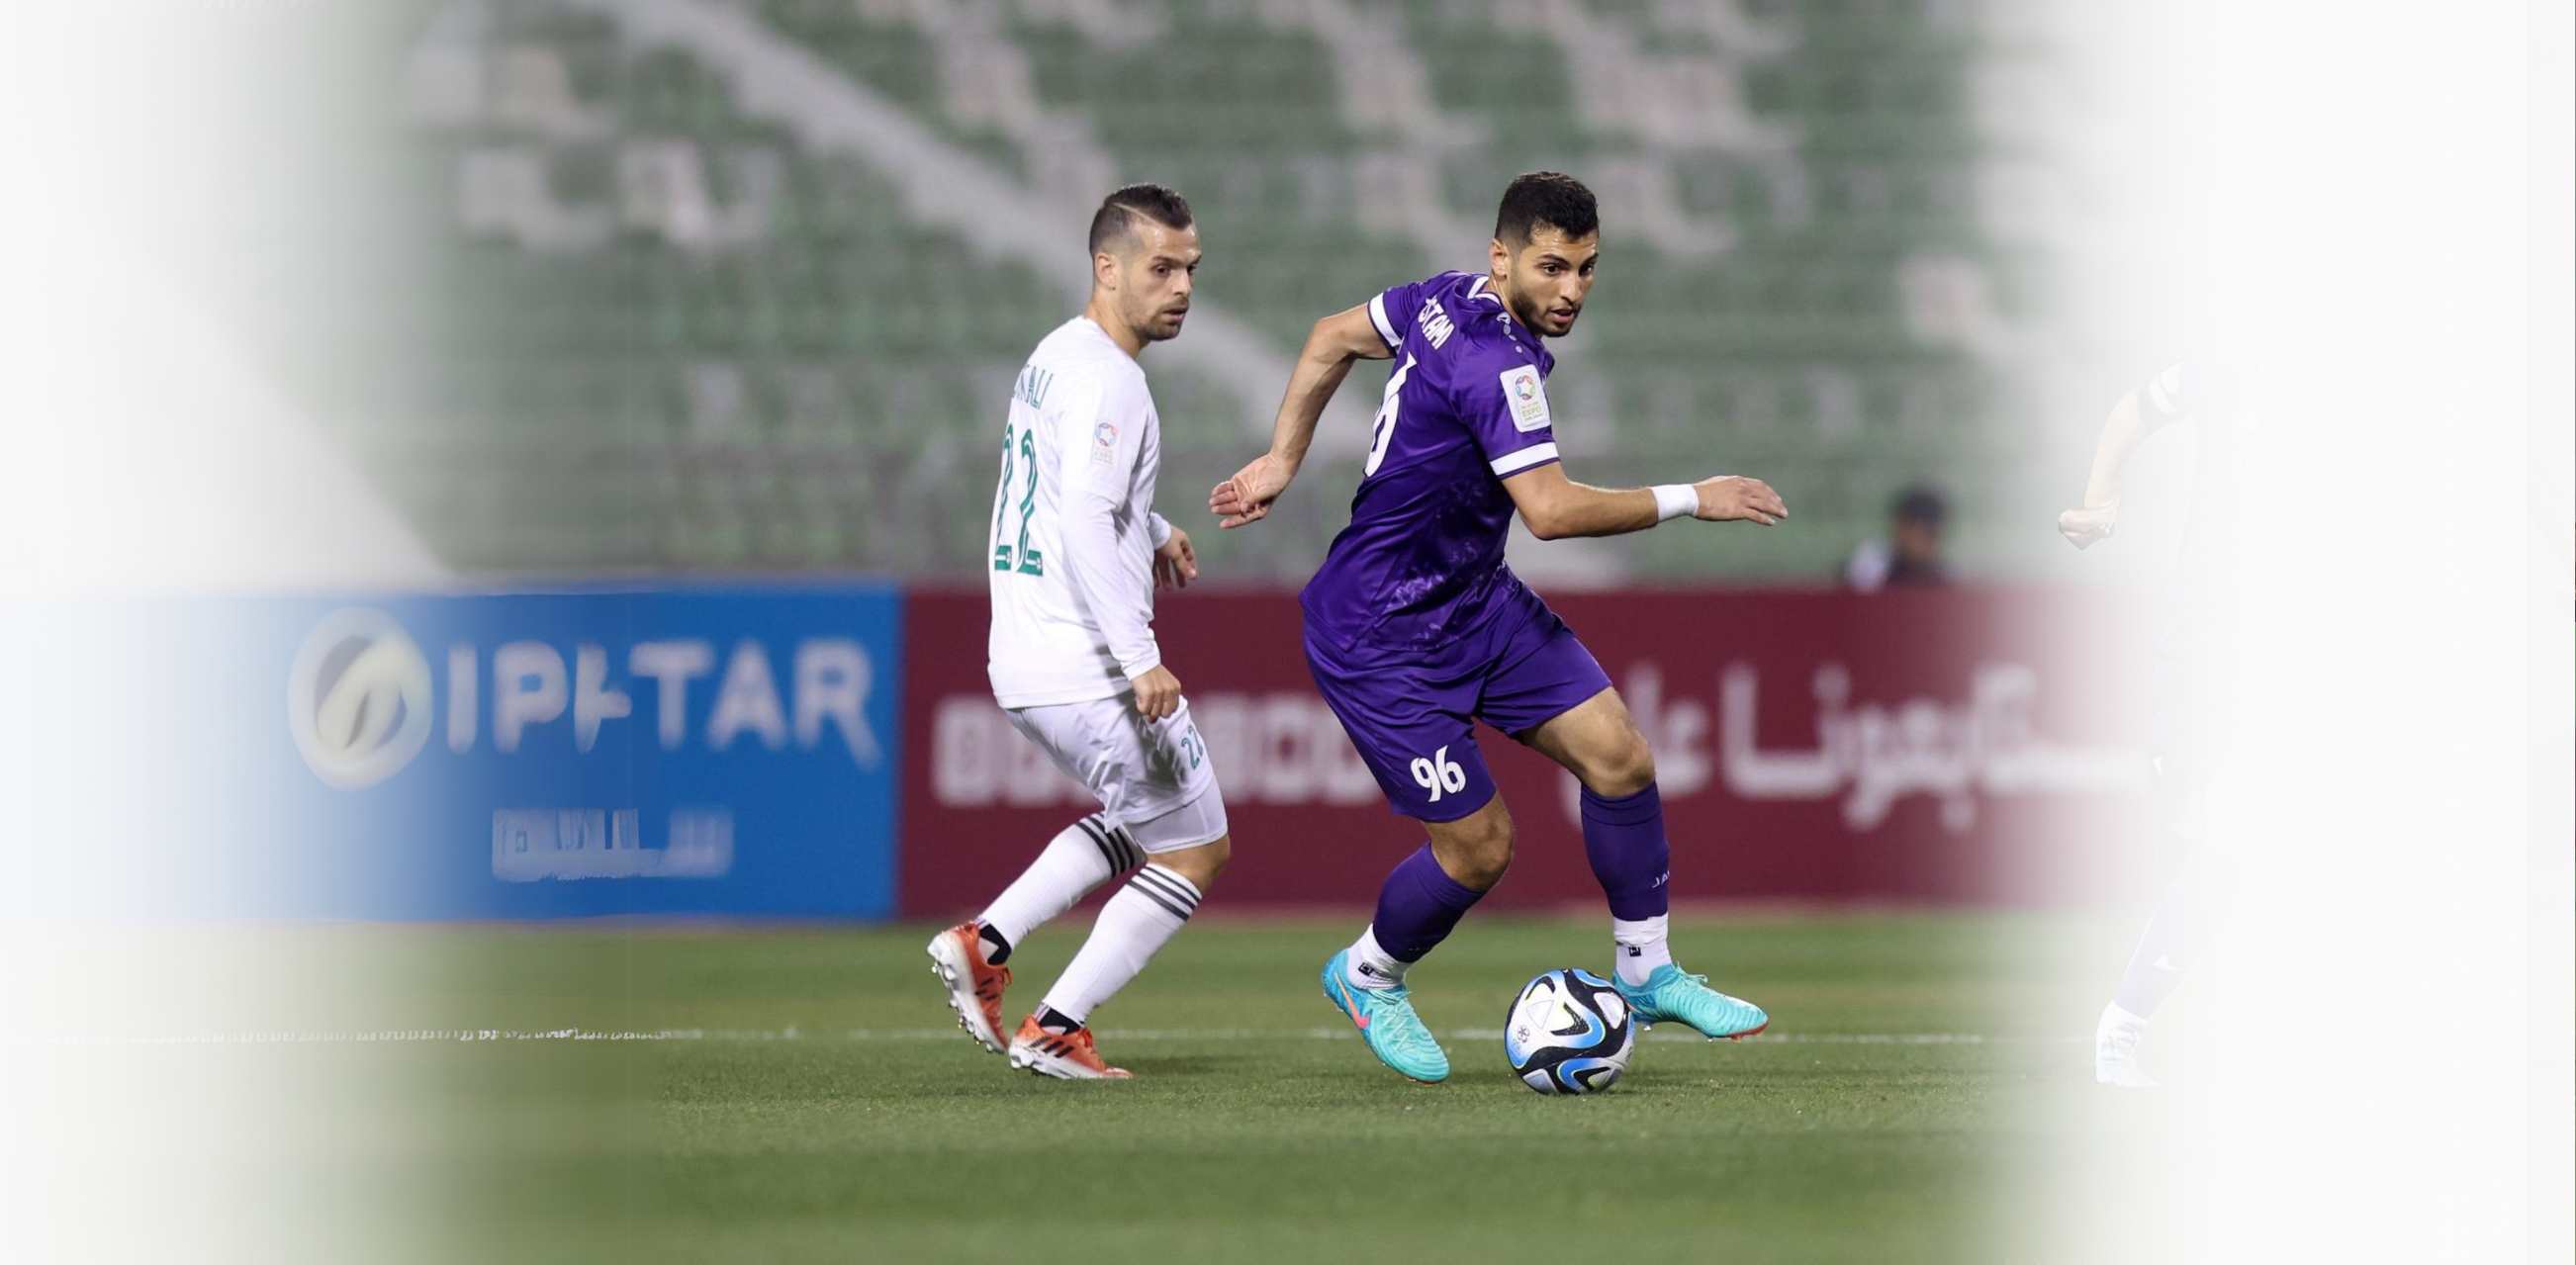 Our team draws with Al-Ahli